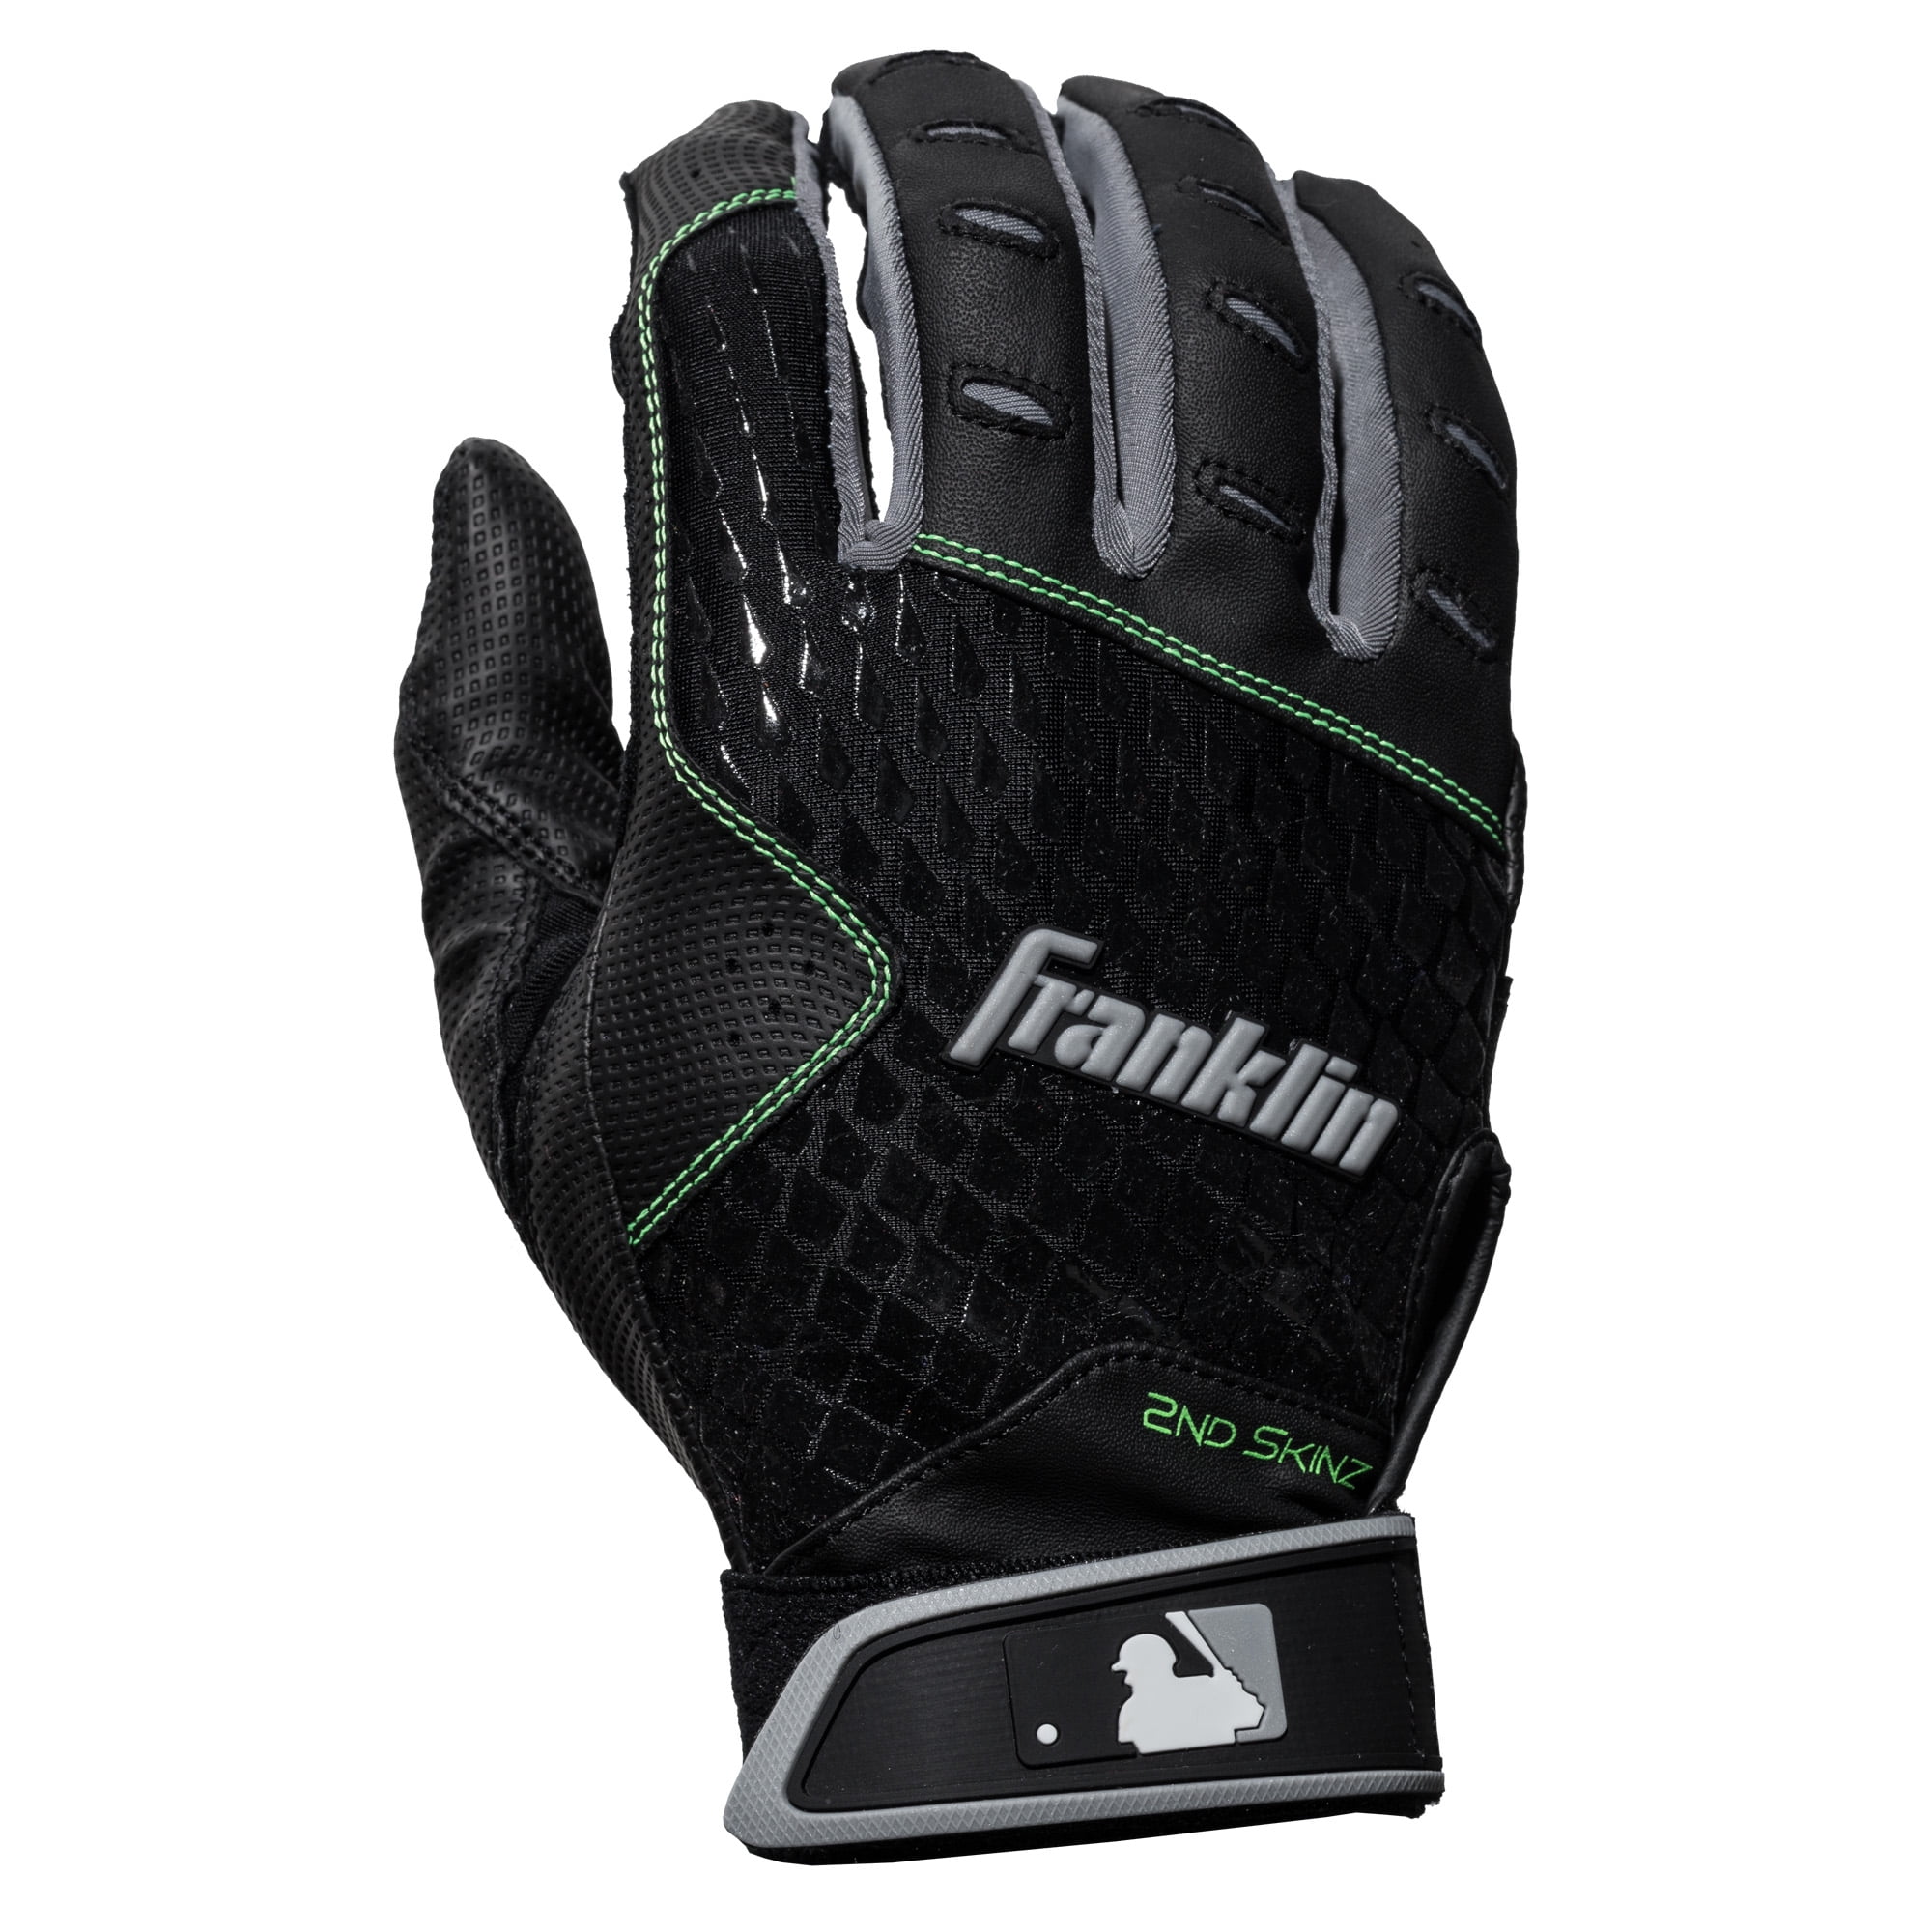 Franklin Sports Womens Fast Pitch 2nd-skinz Medium Batting Gloves for sale online 